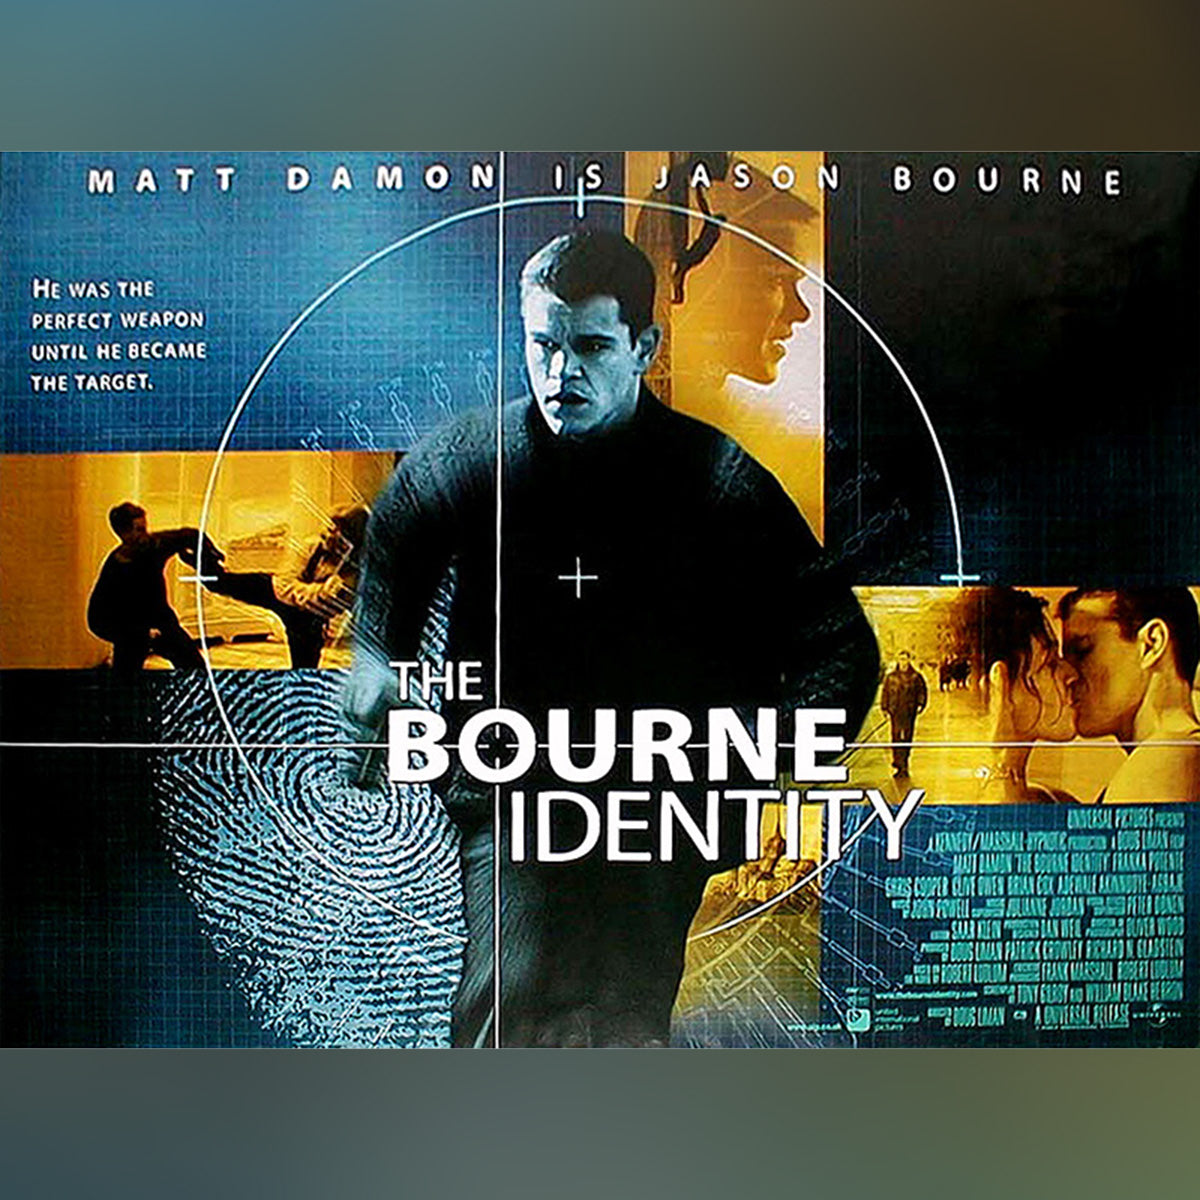 Original Movie Poster of Bourne Identity, The (2002)